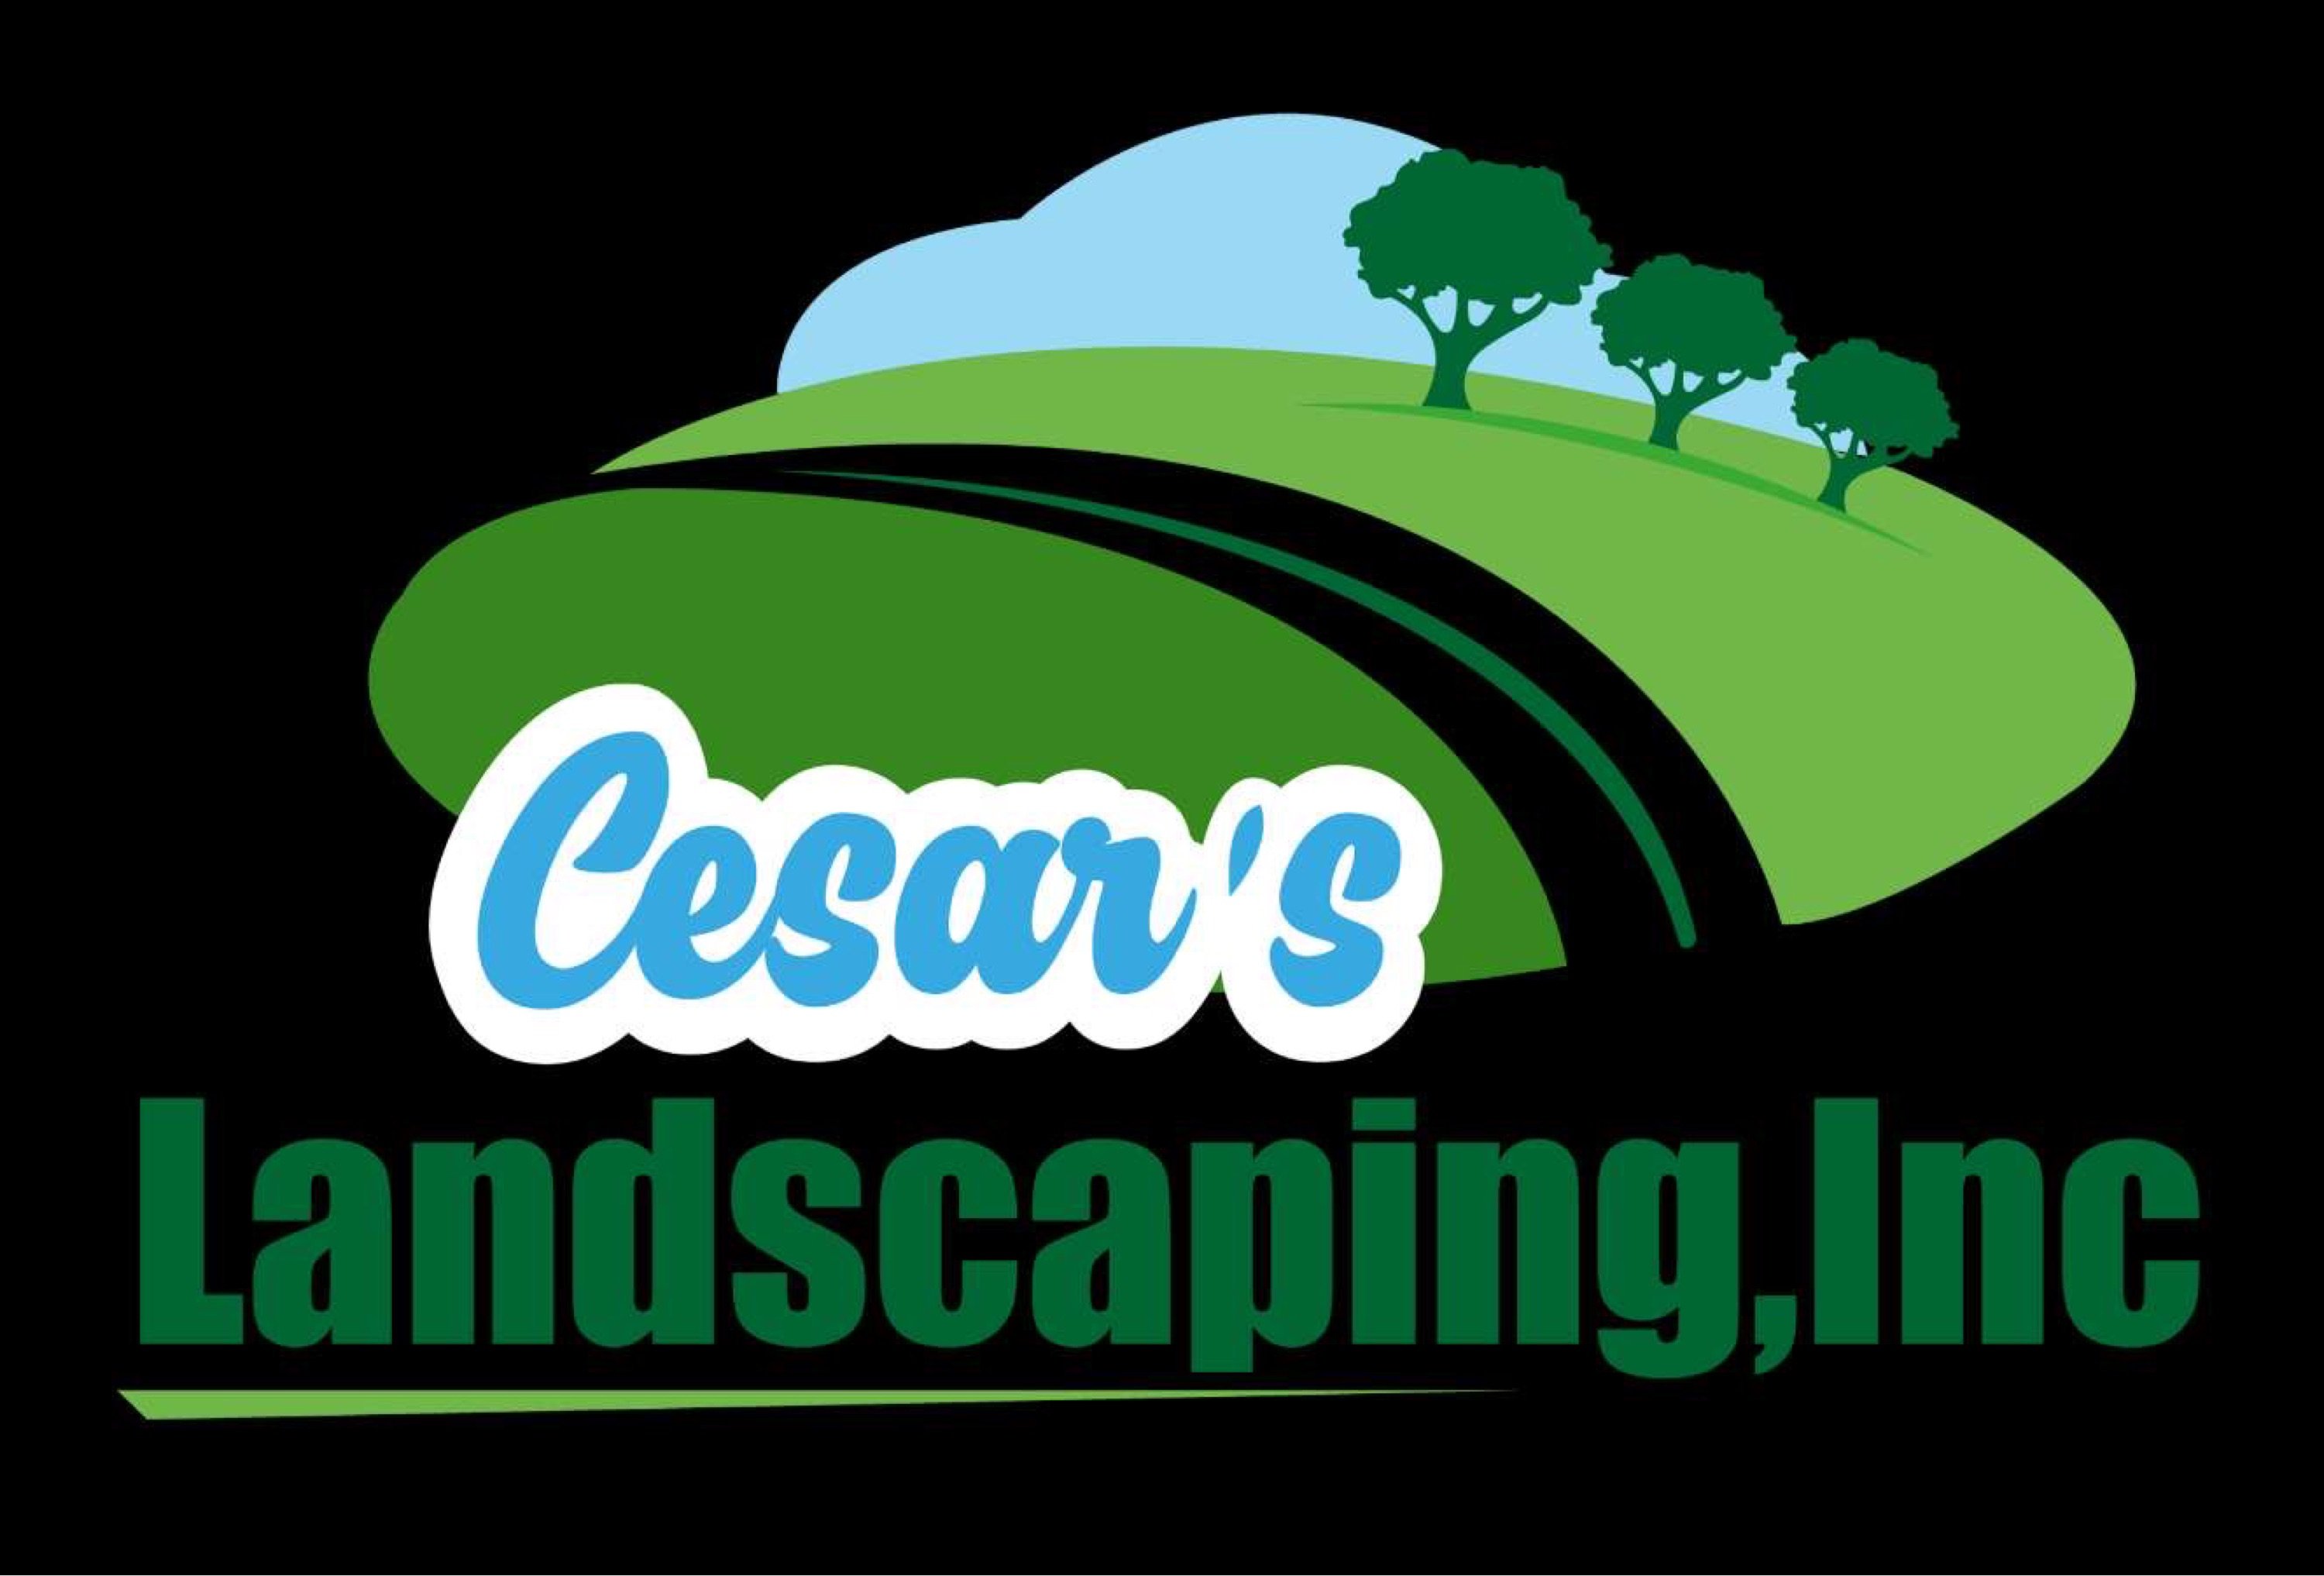 Cesar's Lawn & Landscaping Logo